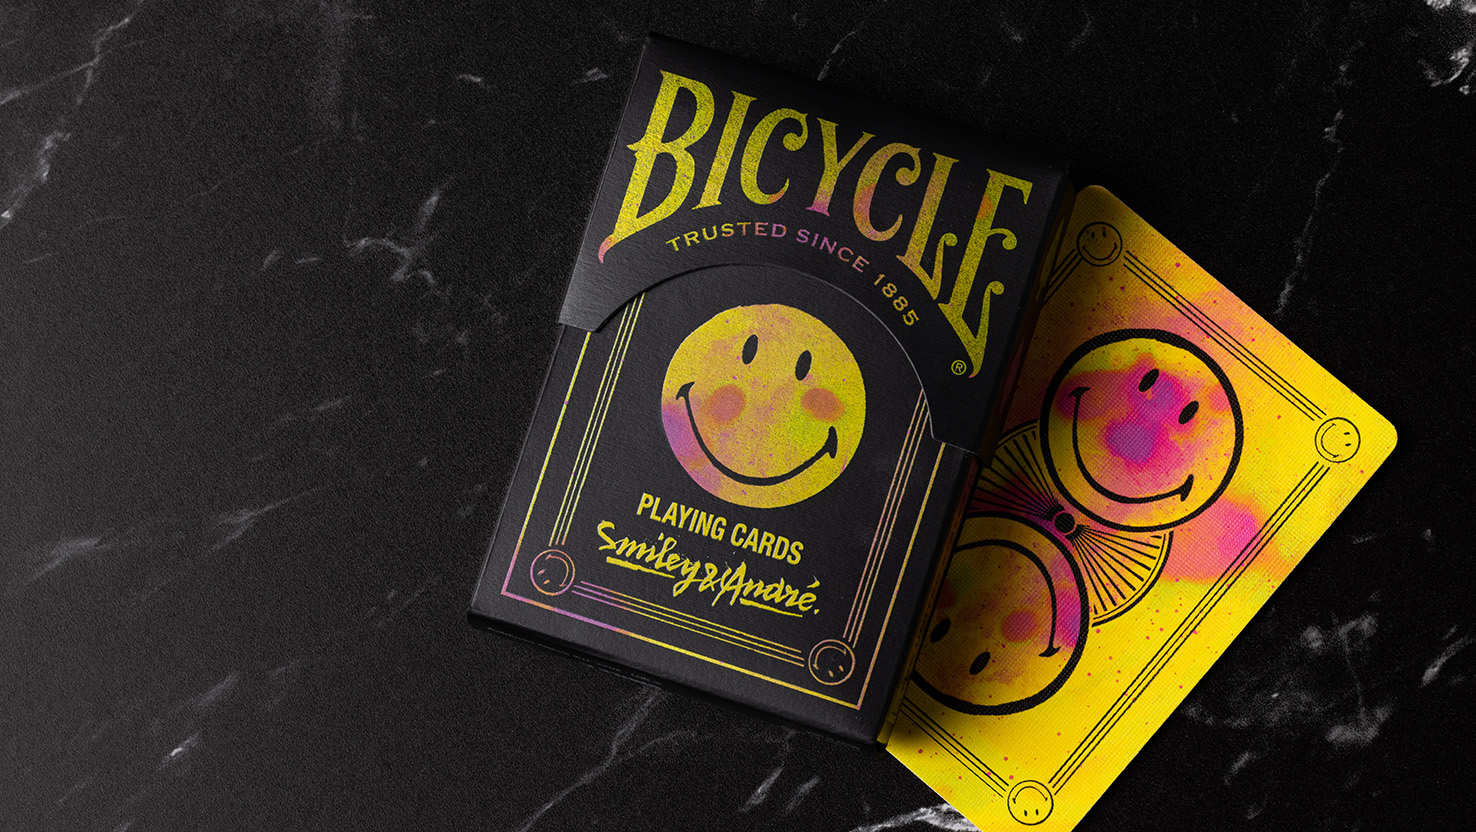 Bicycle x Smiley x André – ein Deck, das knallt